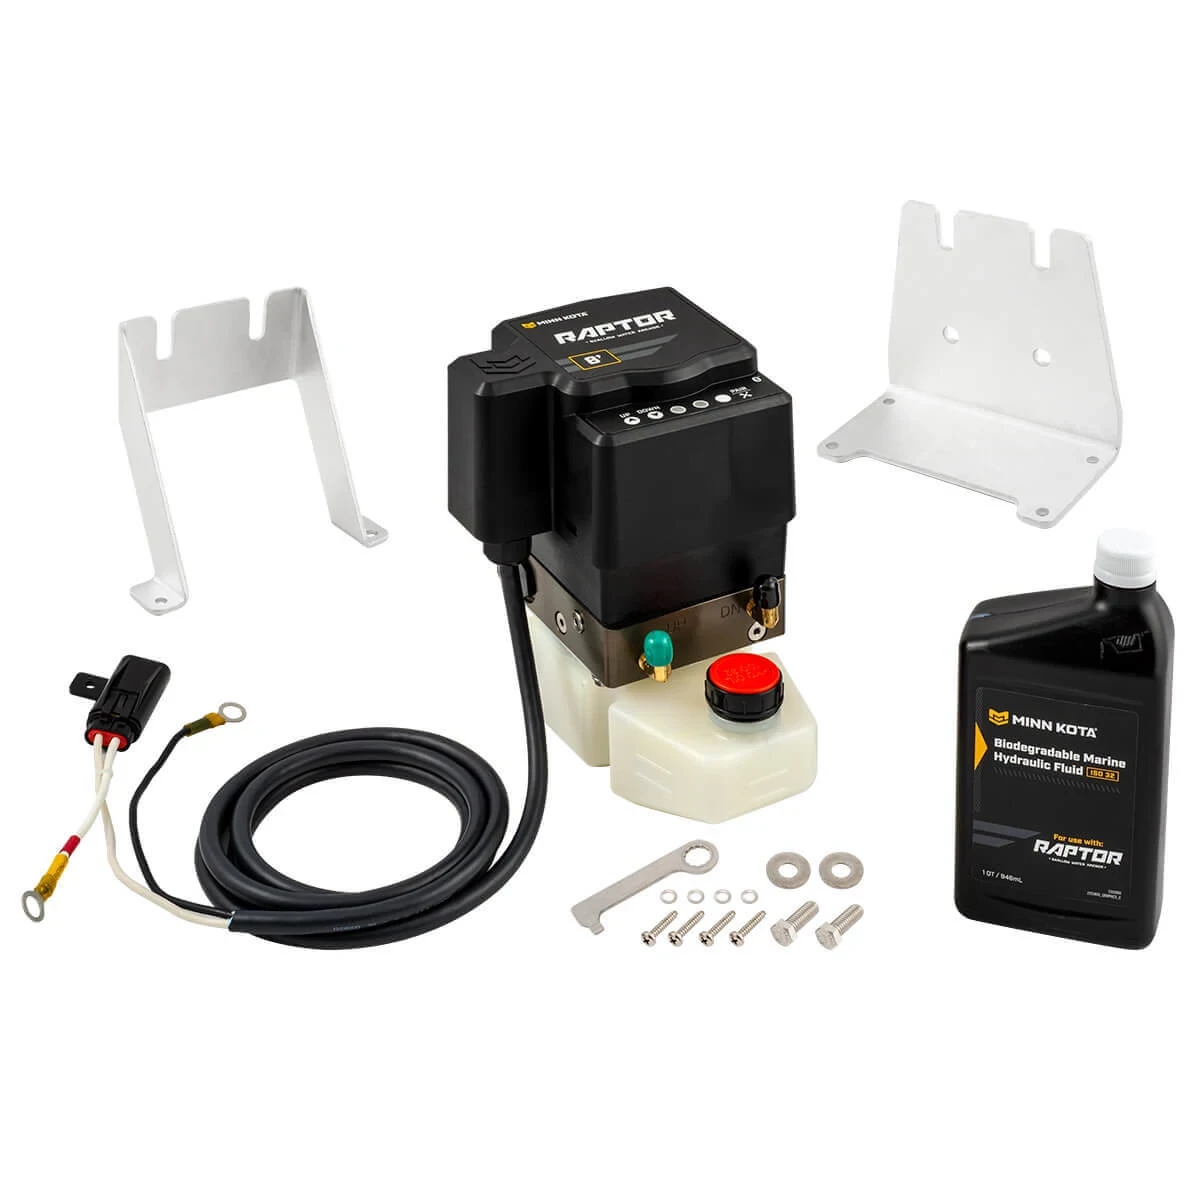 Hydraulic pump, brackets, fluid, and installation equipment